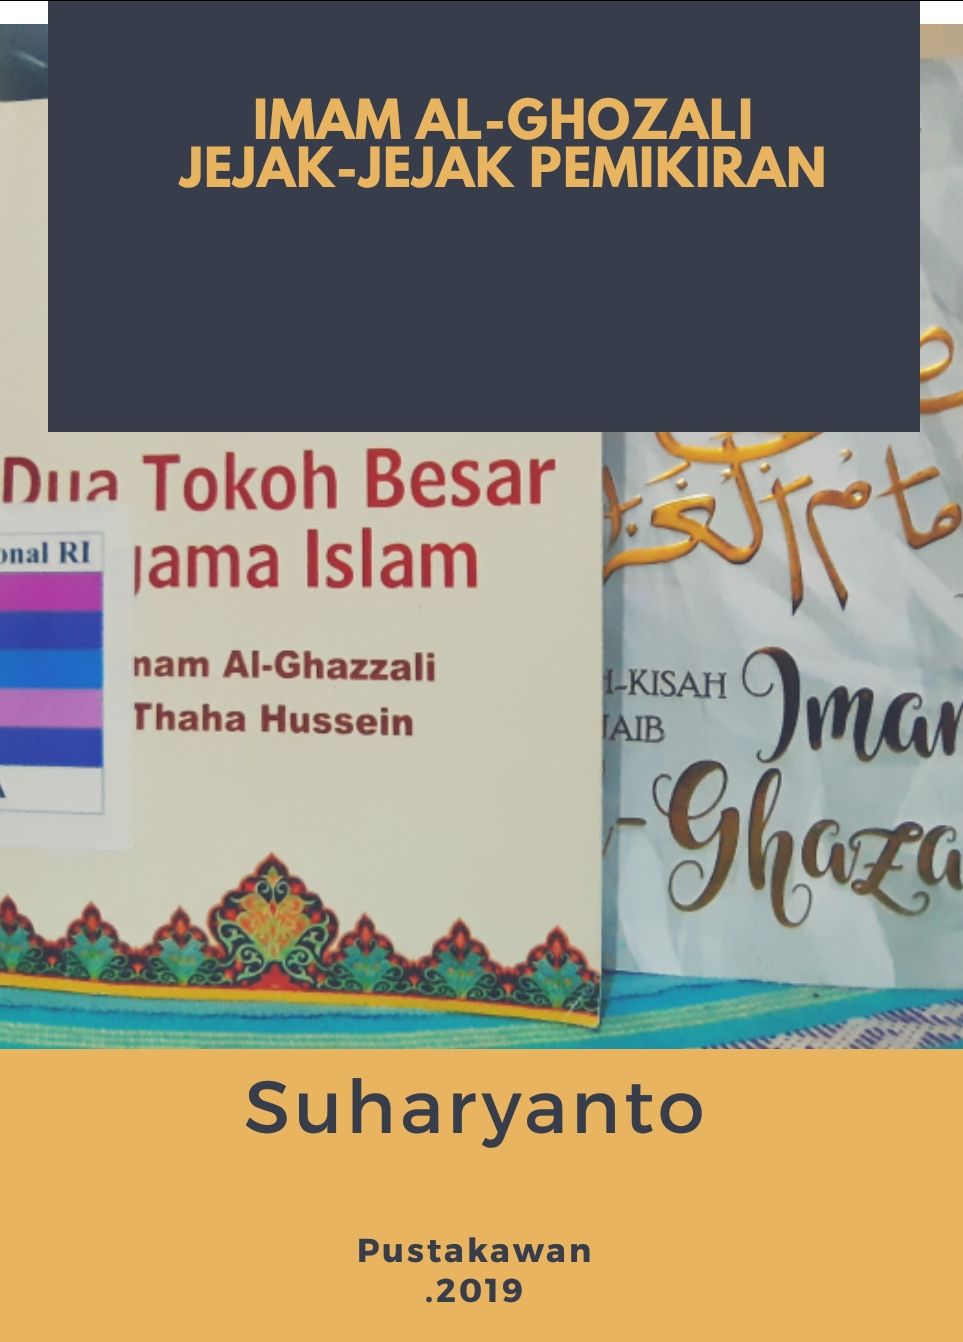 Download Kitab Ihya Ulumuddin Karya Imam Al Ghazali PDF